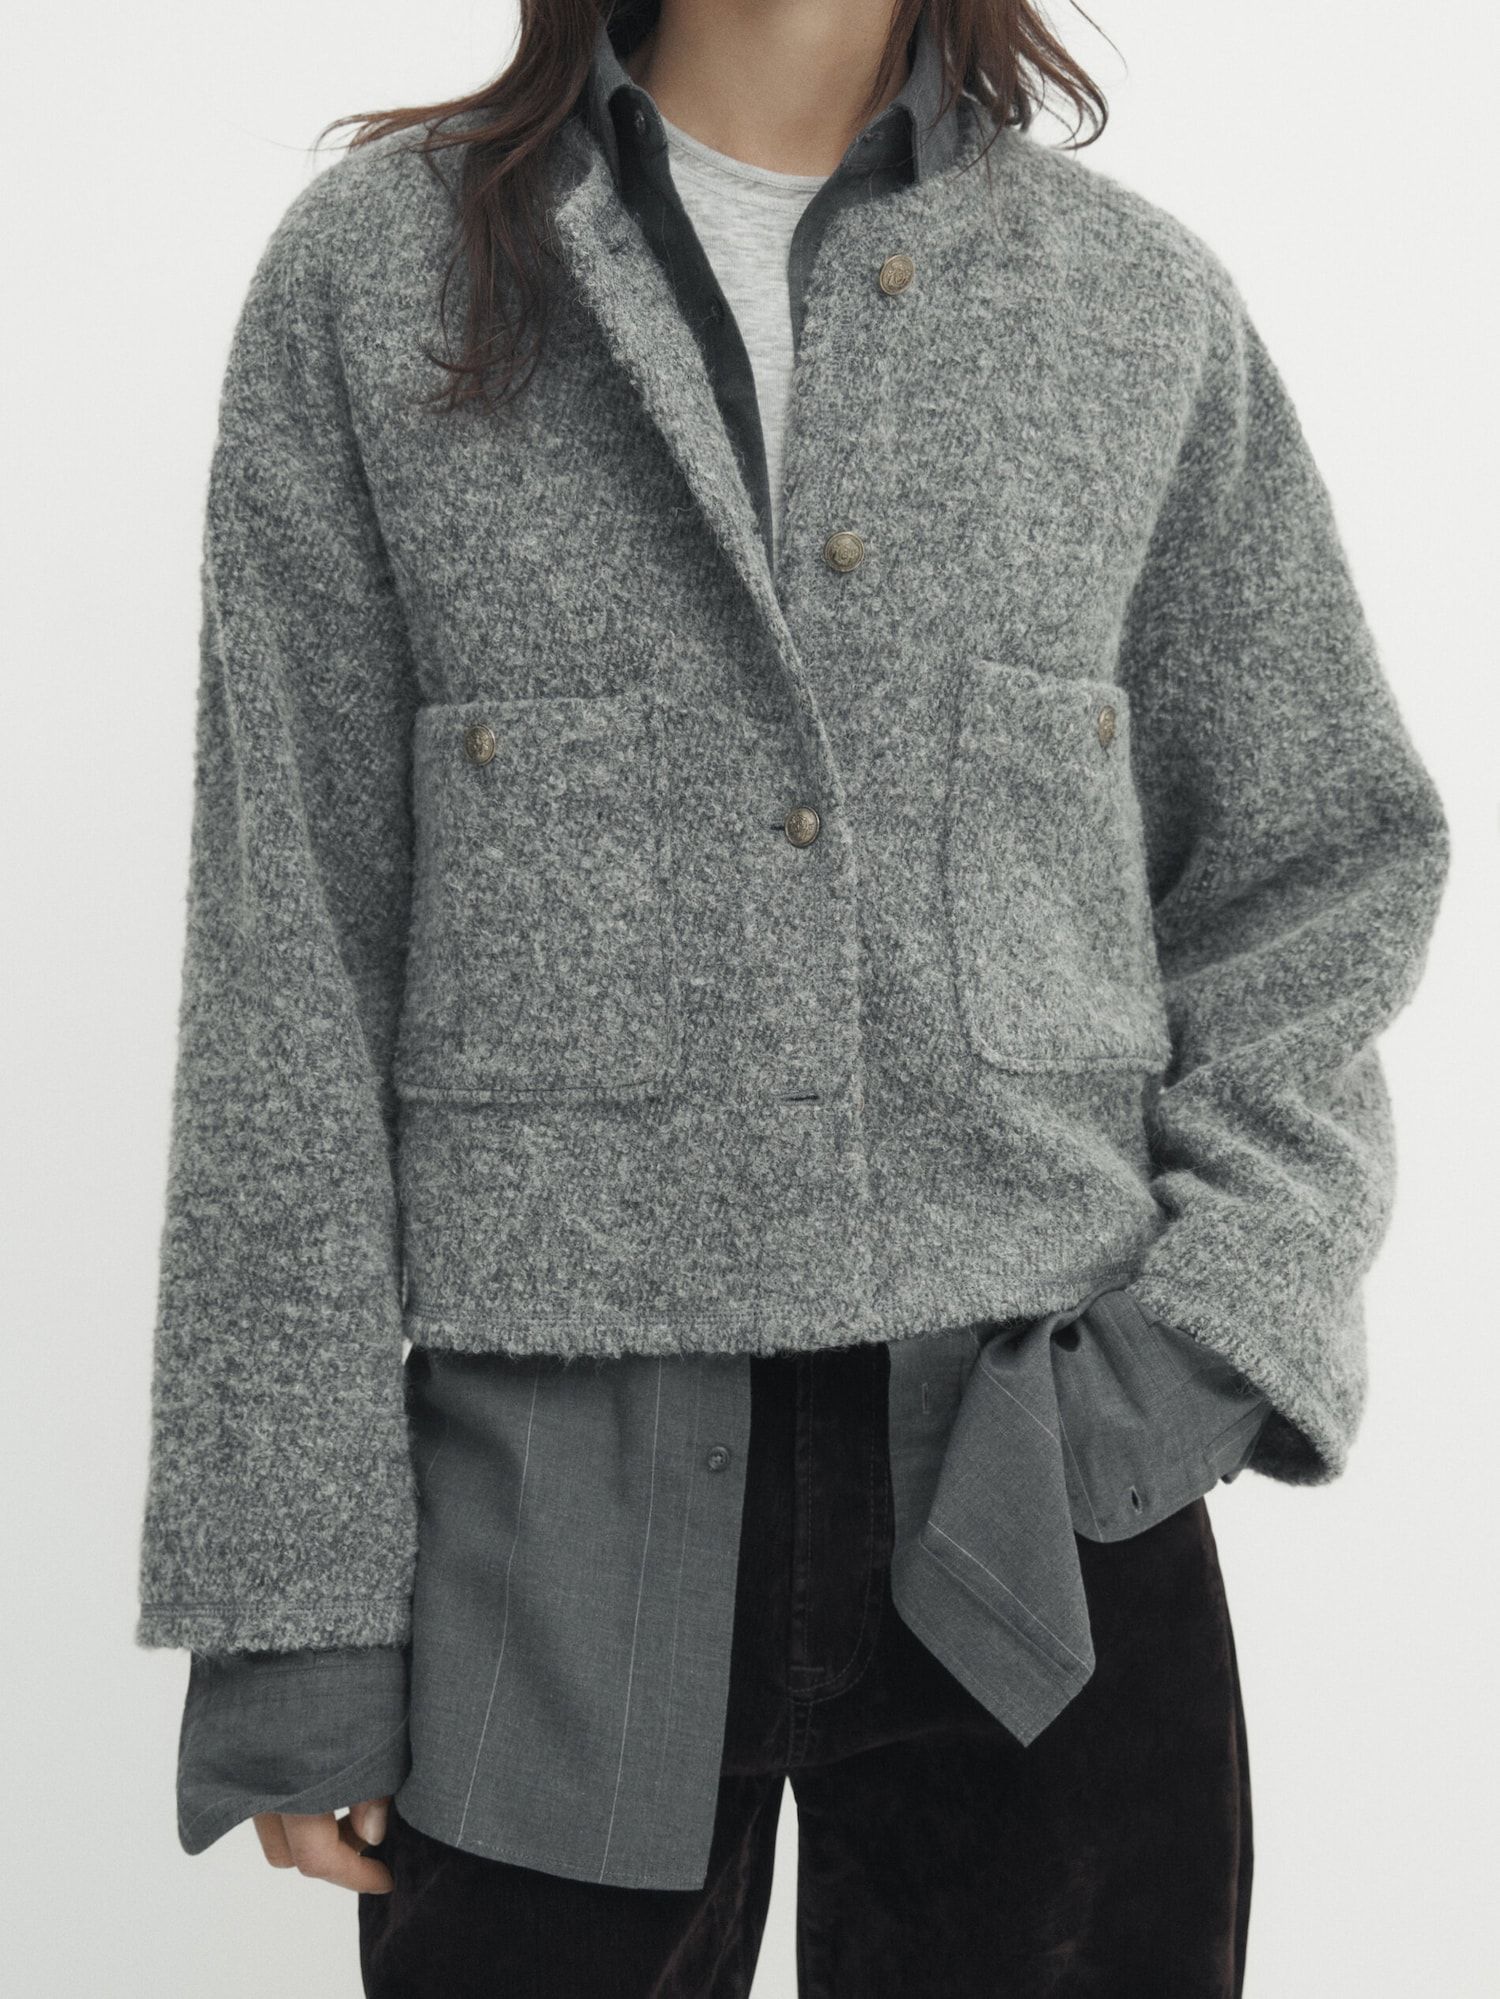 Short drop-shoulder textured jacket | Massimo Dutti UK